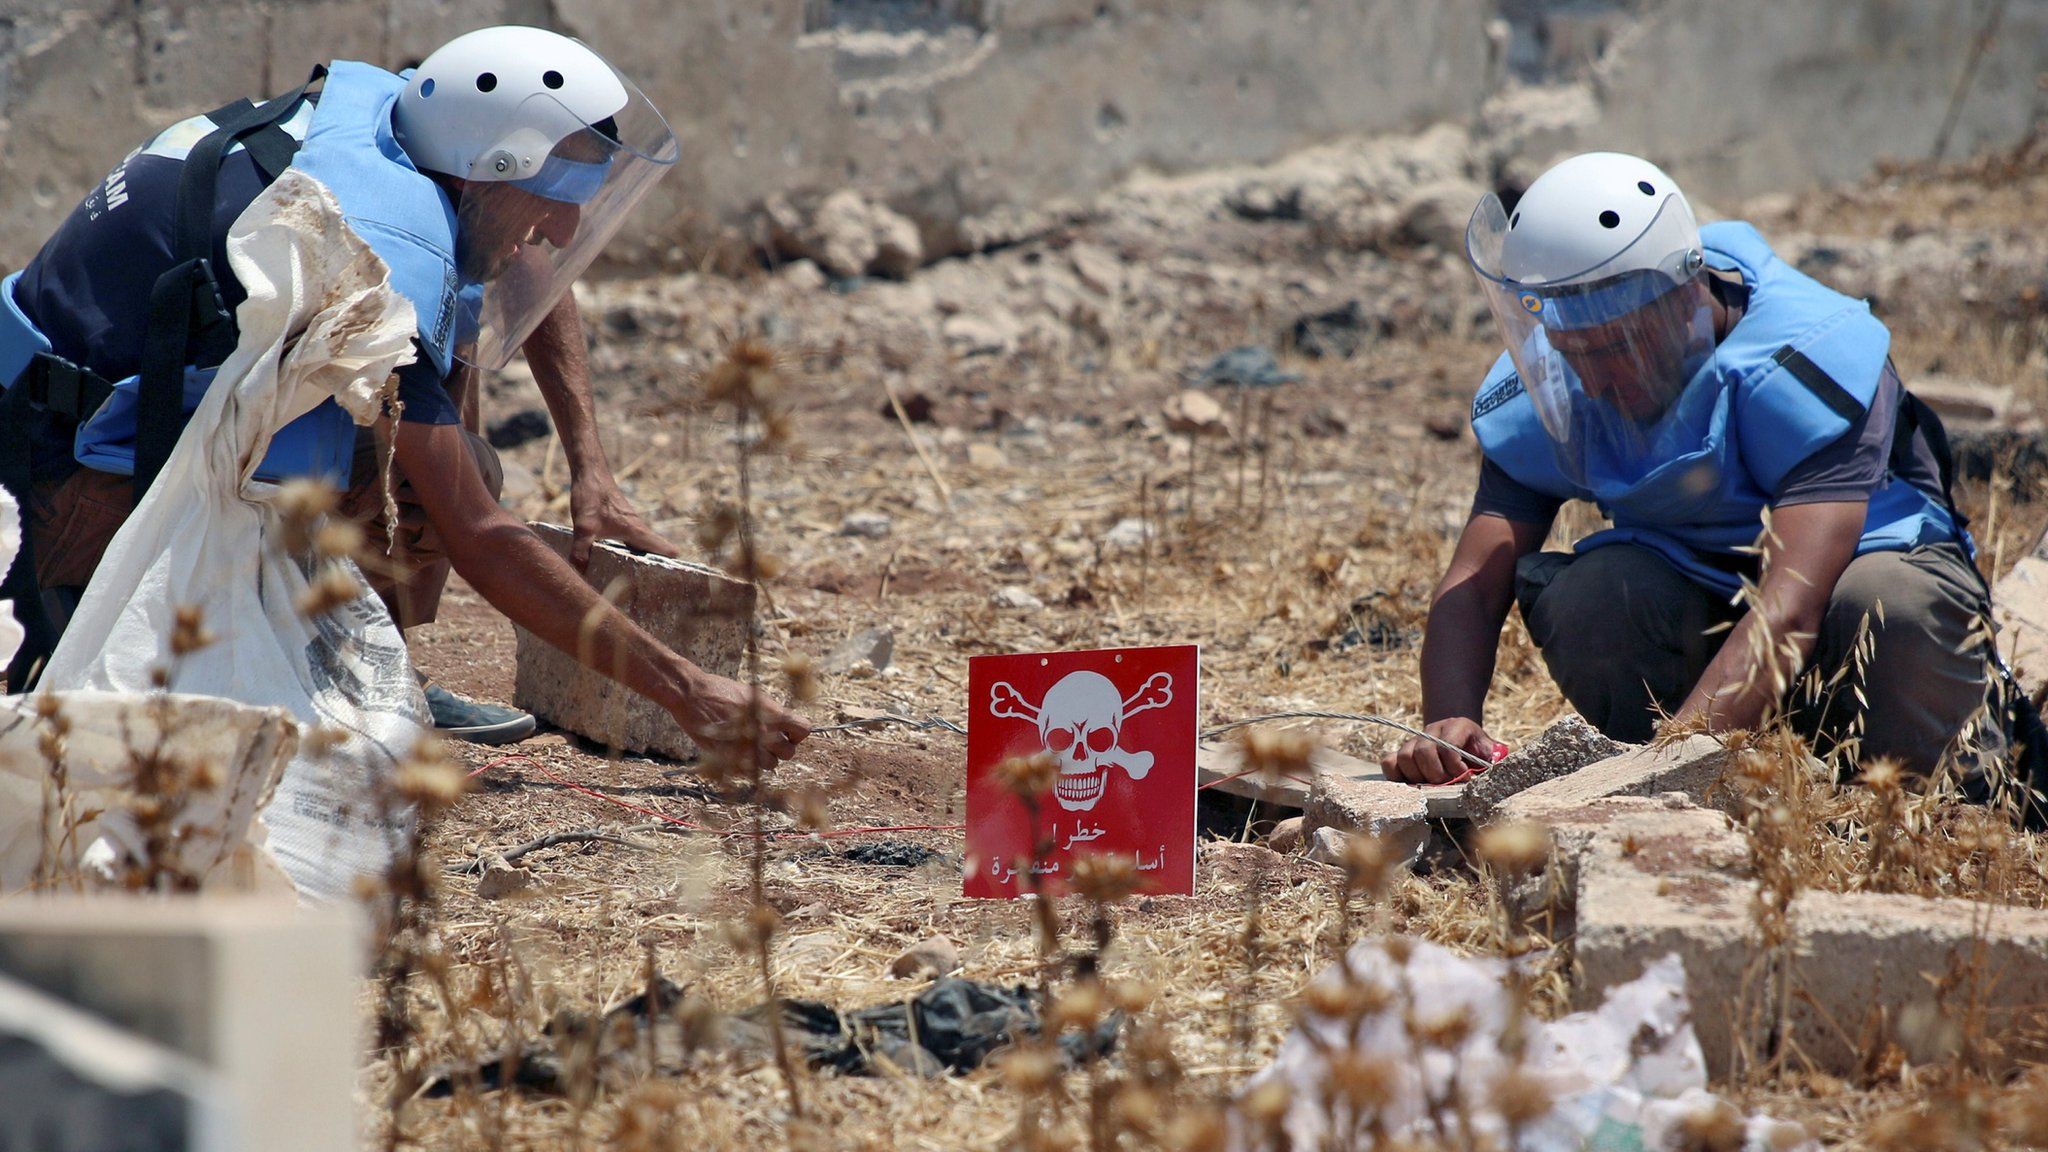 Civil defence members prepare to safely detonate cluster bombs in a rebel-held area in Deraa, Syria (26 July 2017)